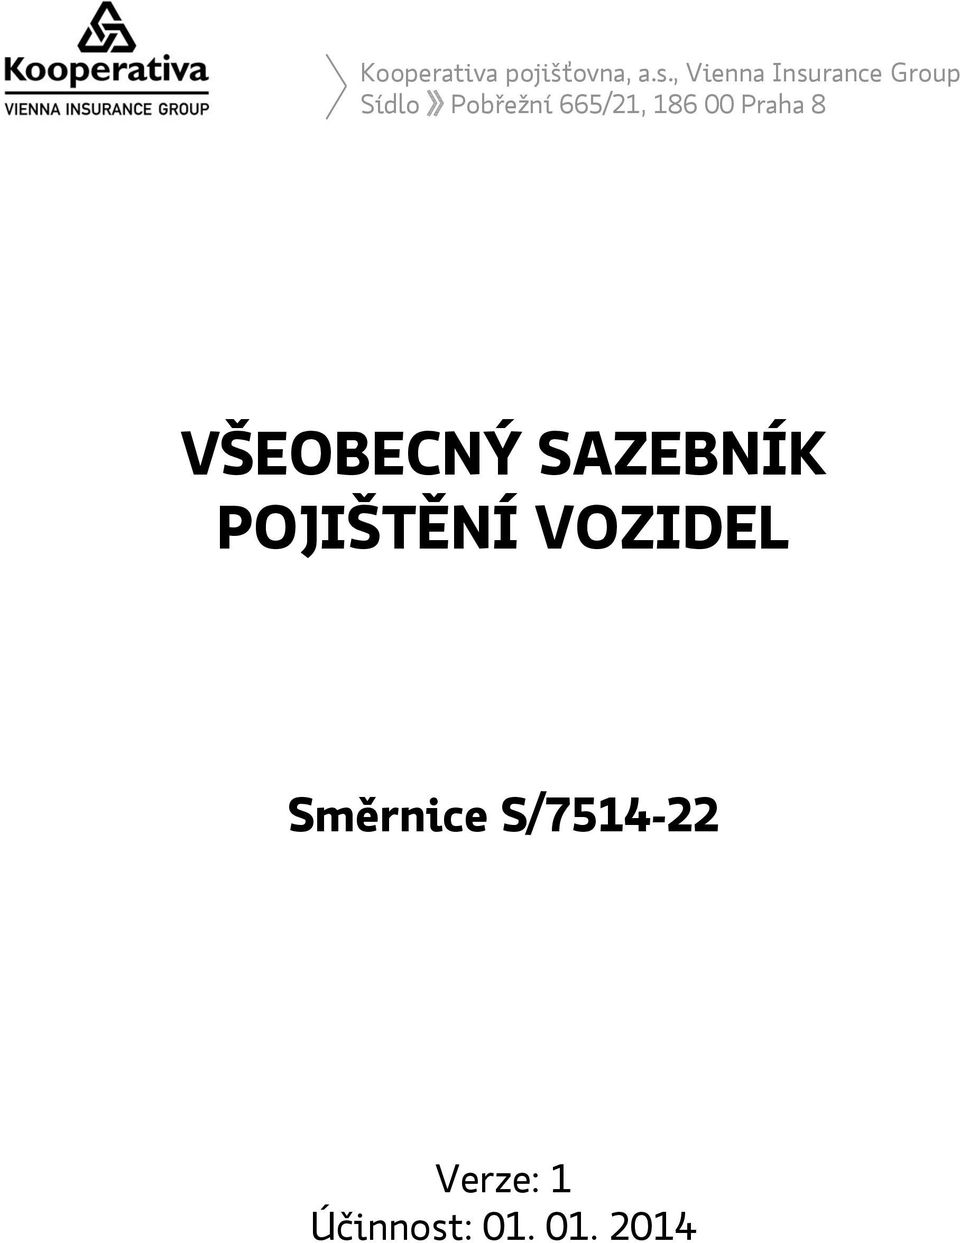 Pobřežní 665/21, 186 00 Praha 8 VŠEOBECNÝ